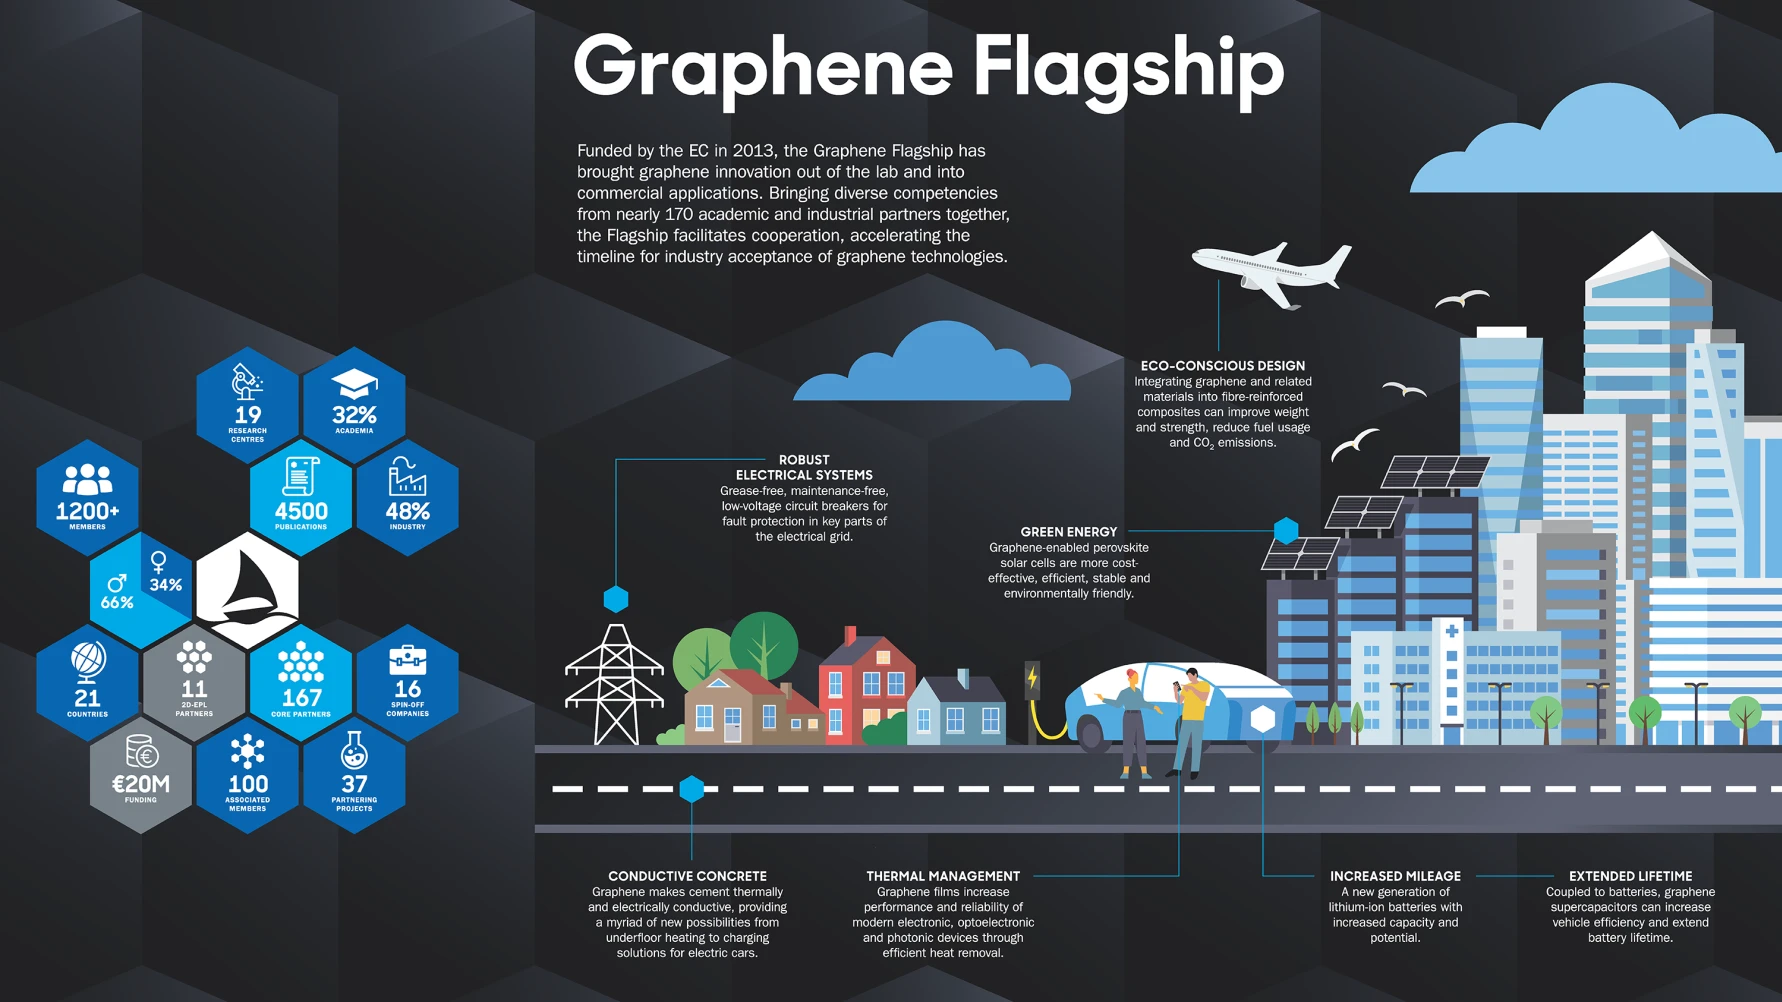 Graphene Flagship将在Enlit Europe展示创新